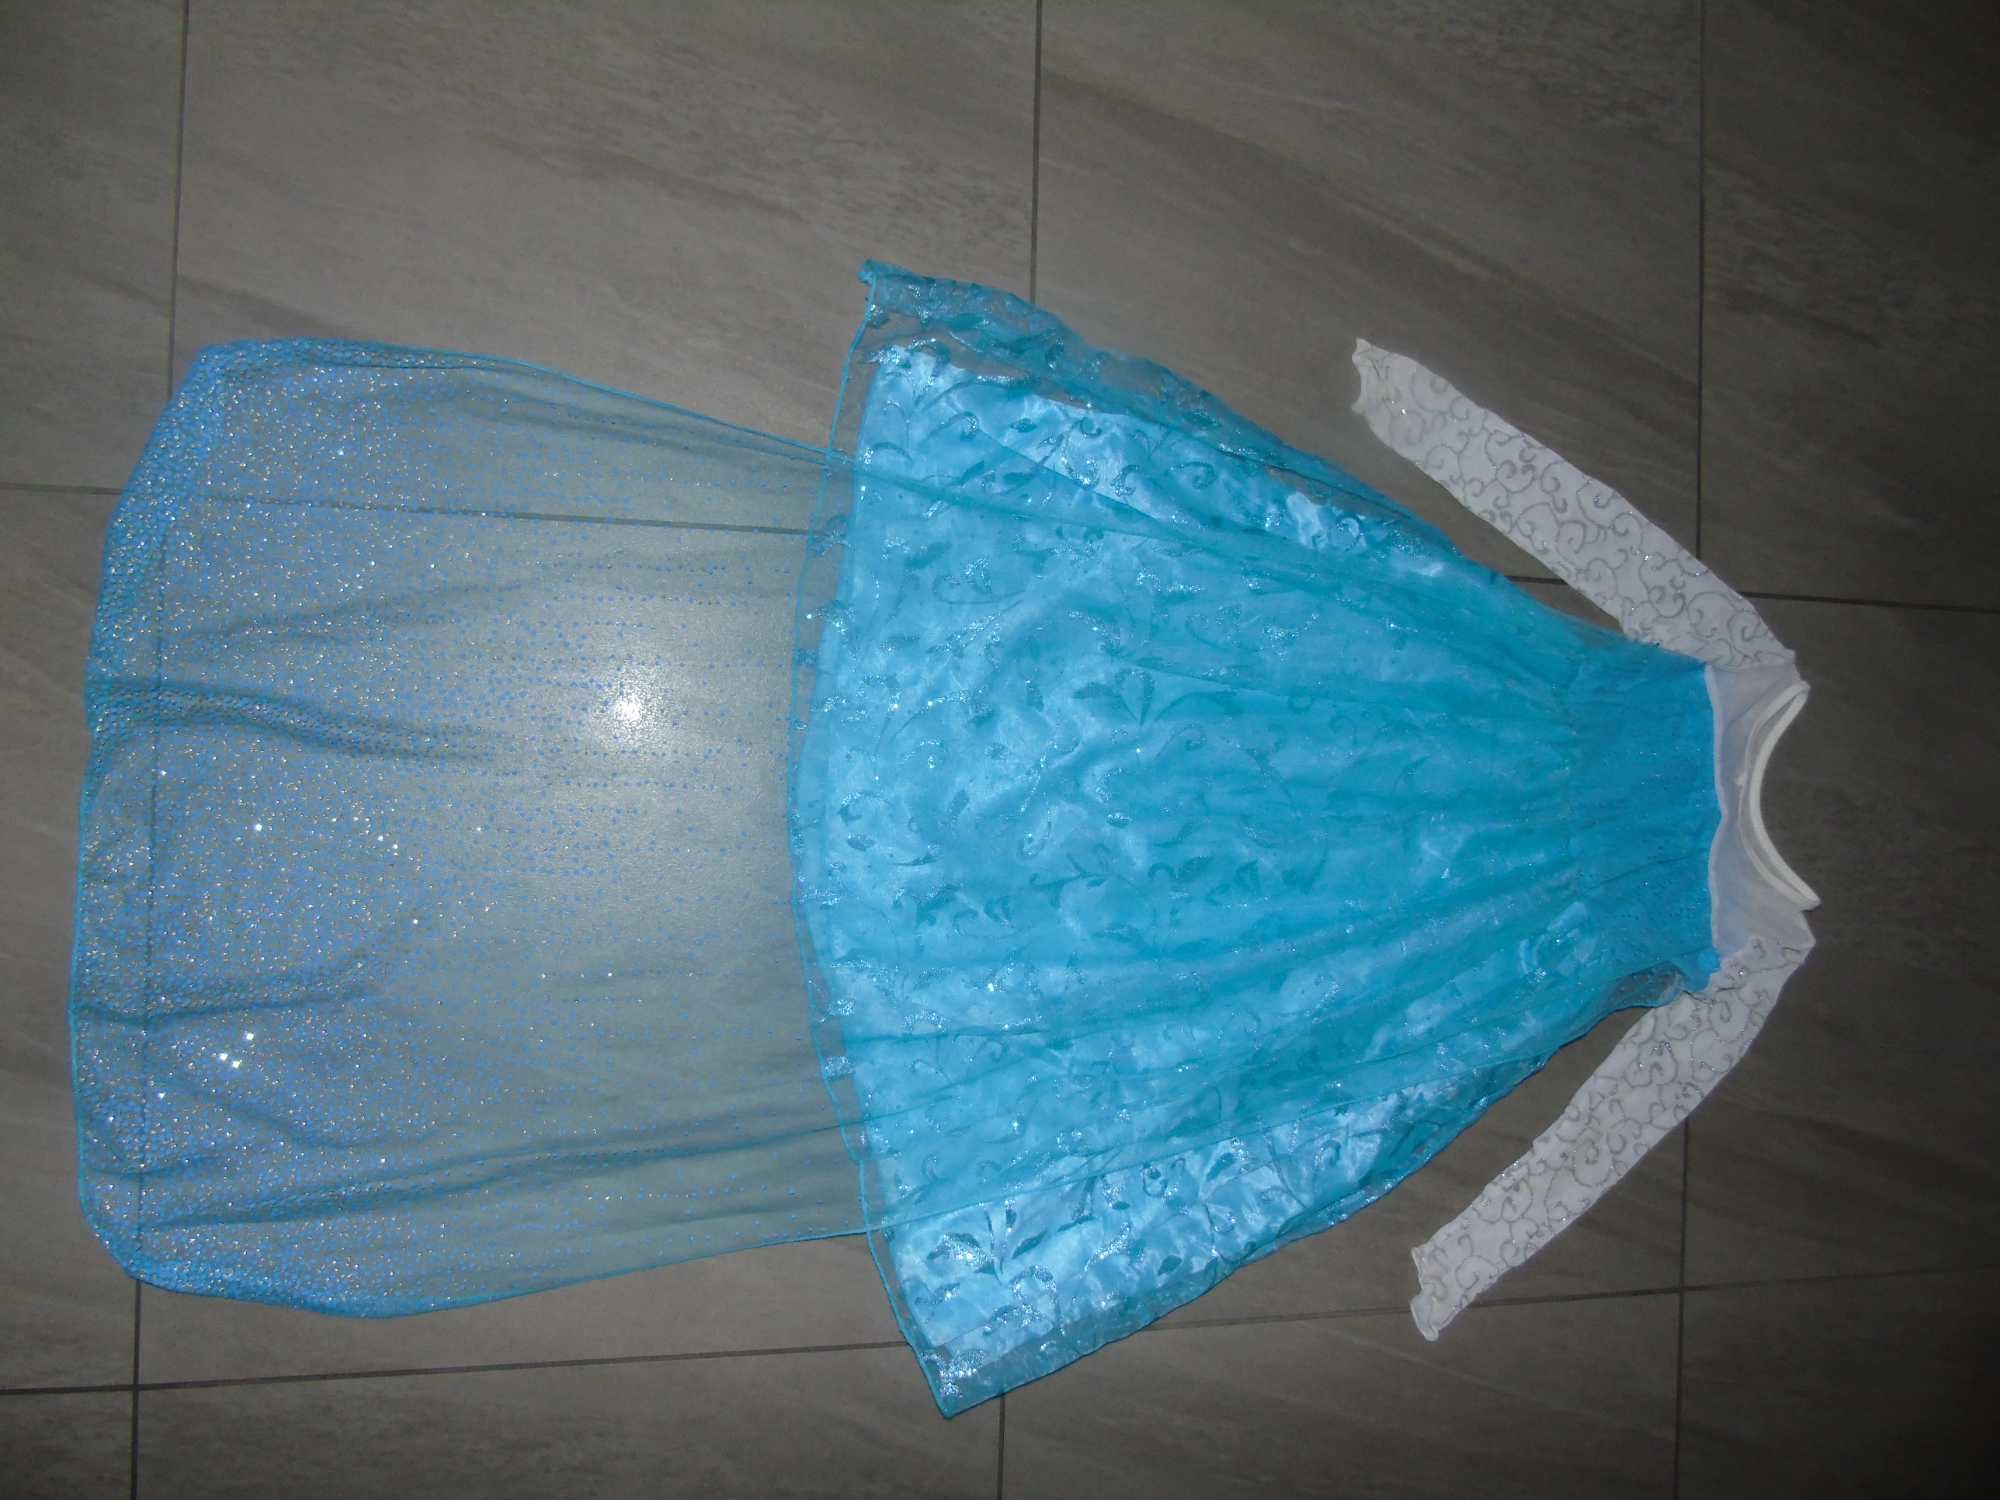 strój sukienka Kraina Lodu 6-8 lat